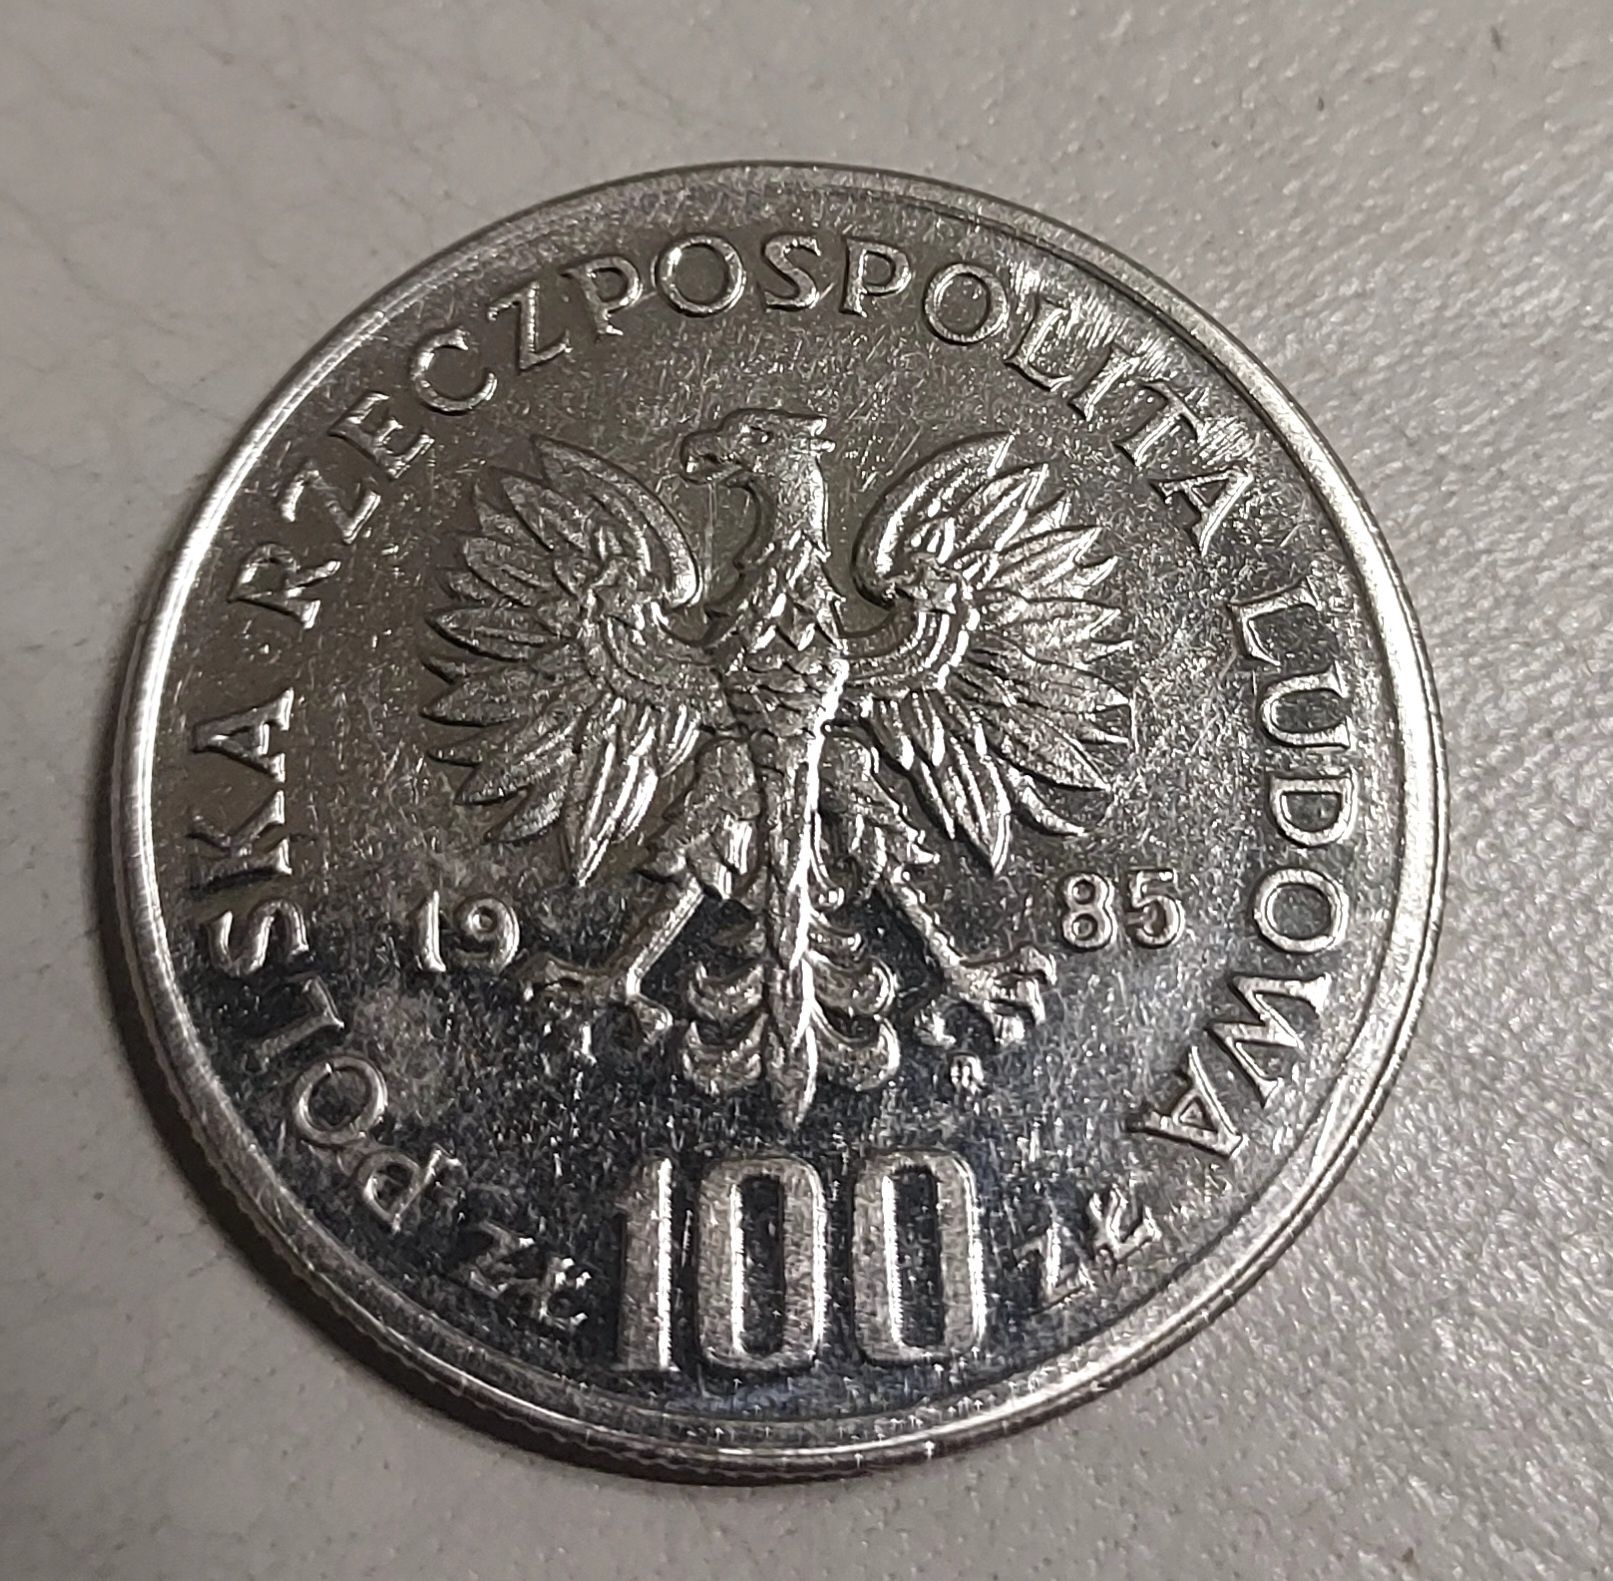 100 zł 1985 r. Centrum Zdrowia Matki Polki